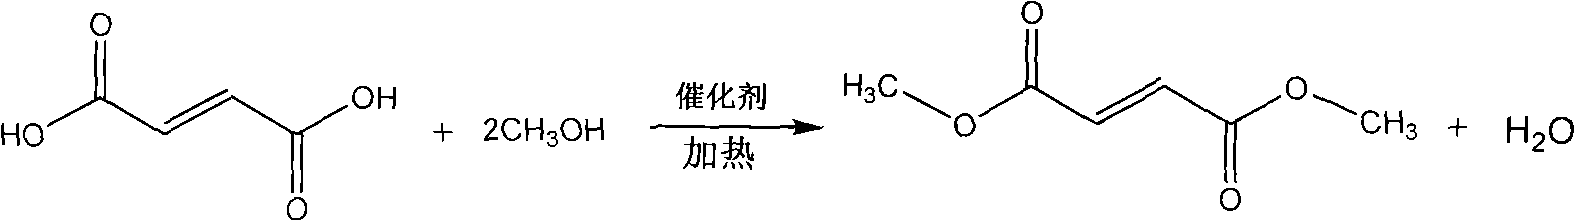 Preparation method of dimethyl fumarate